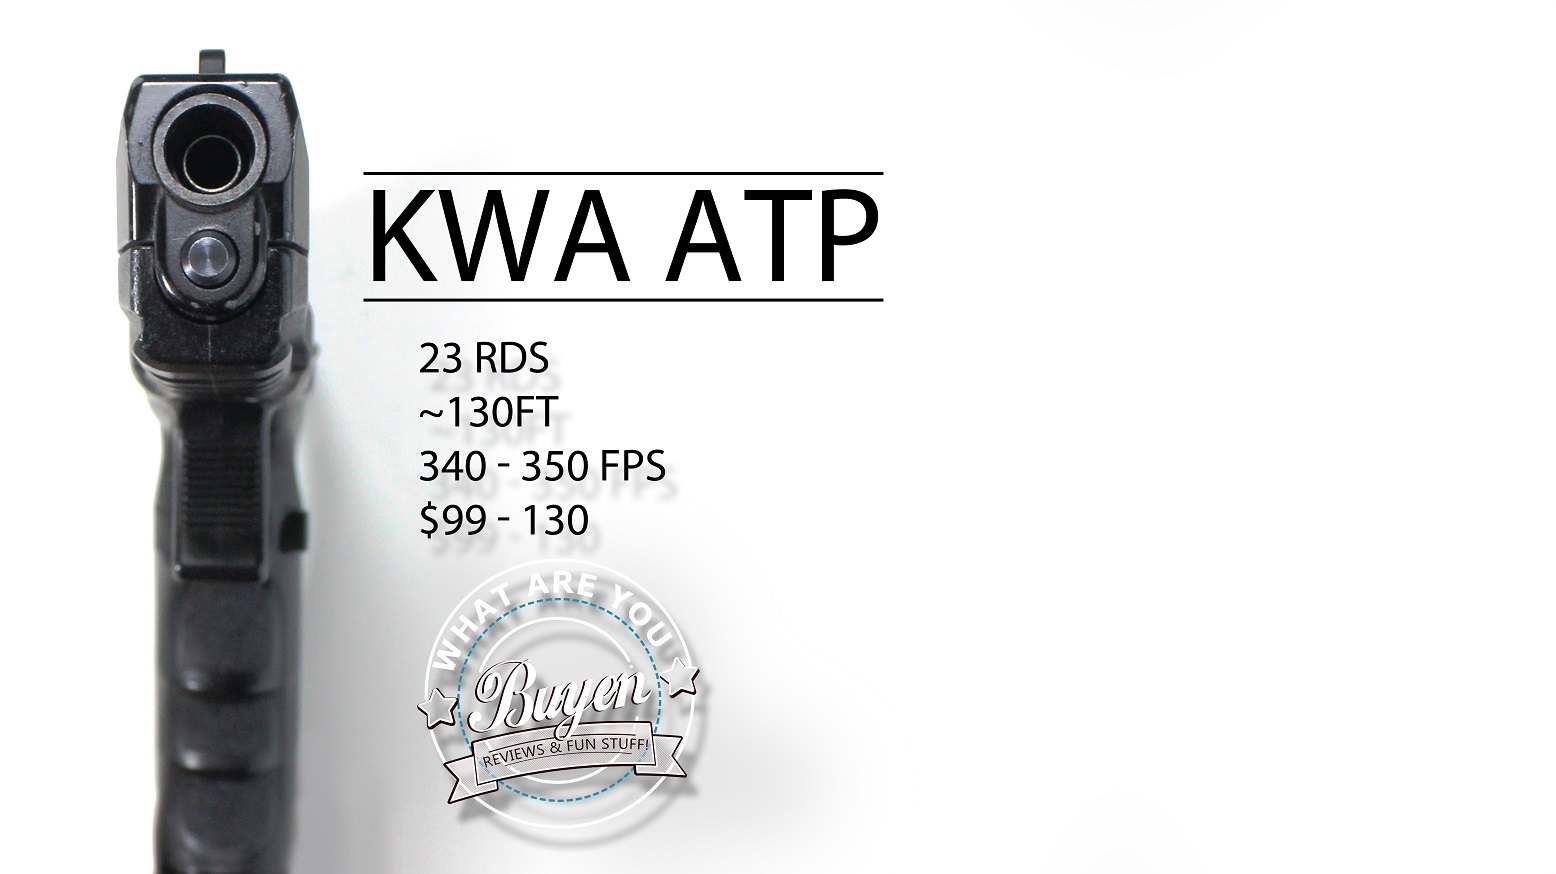 KWA ATP specs